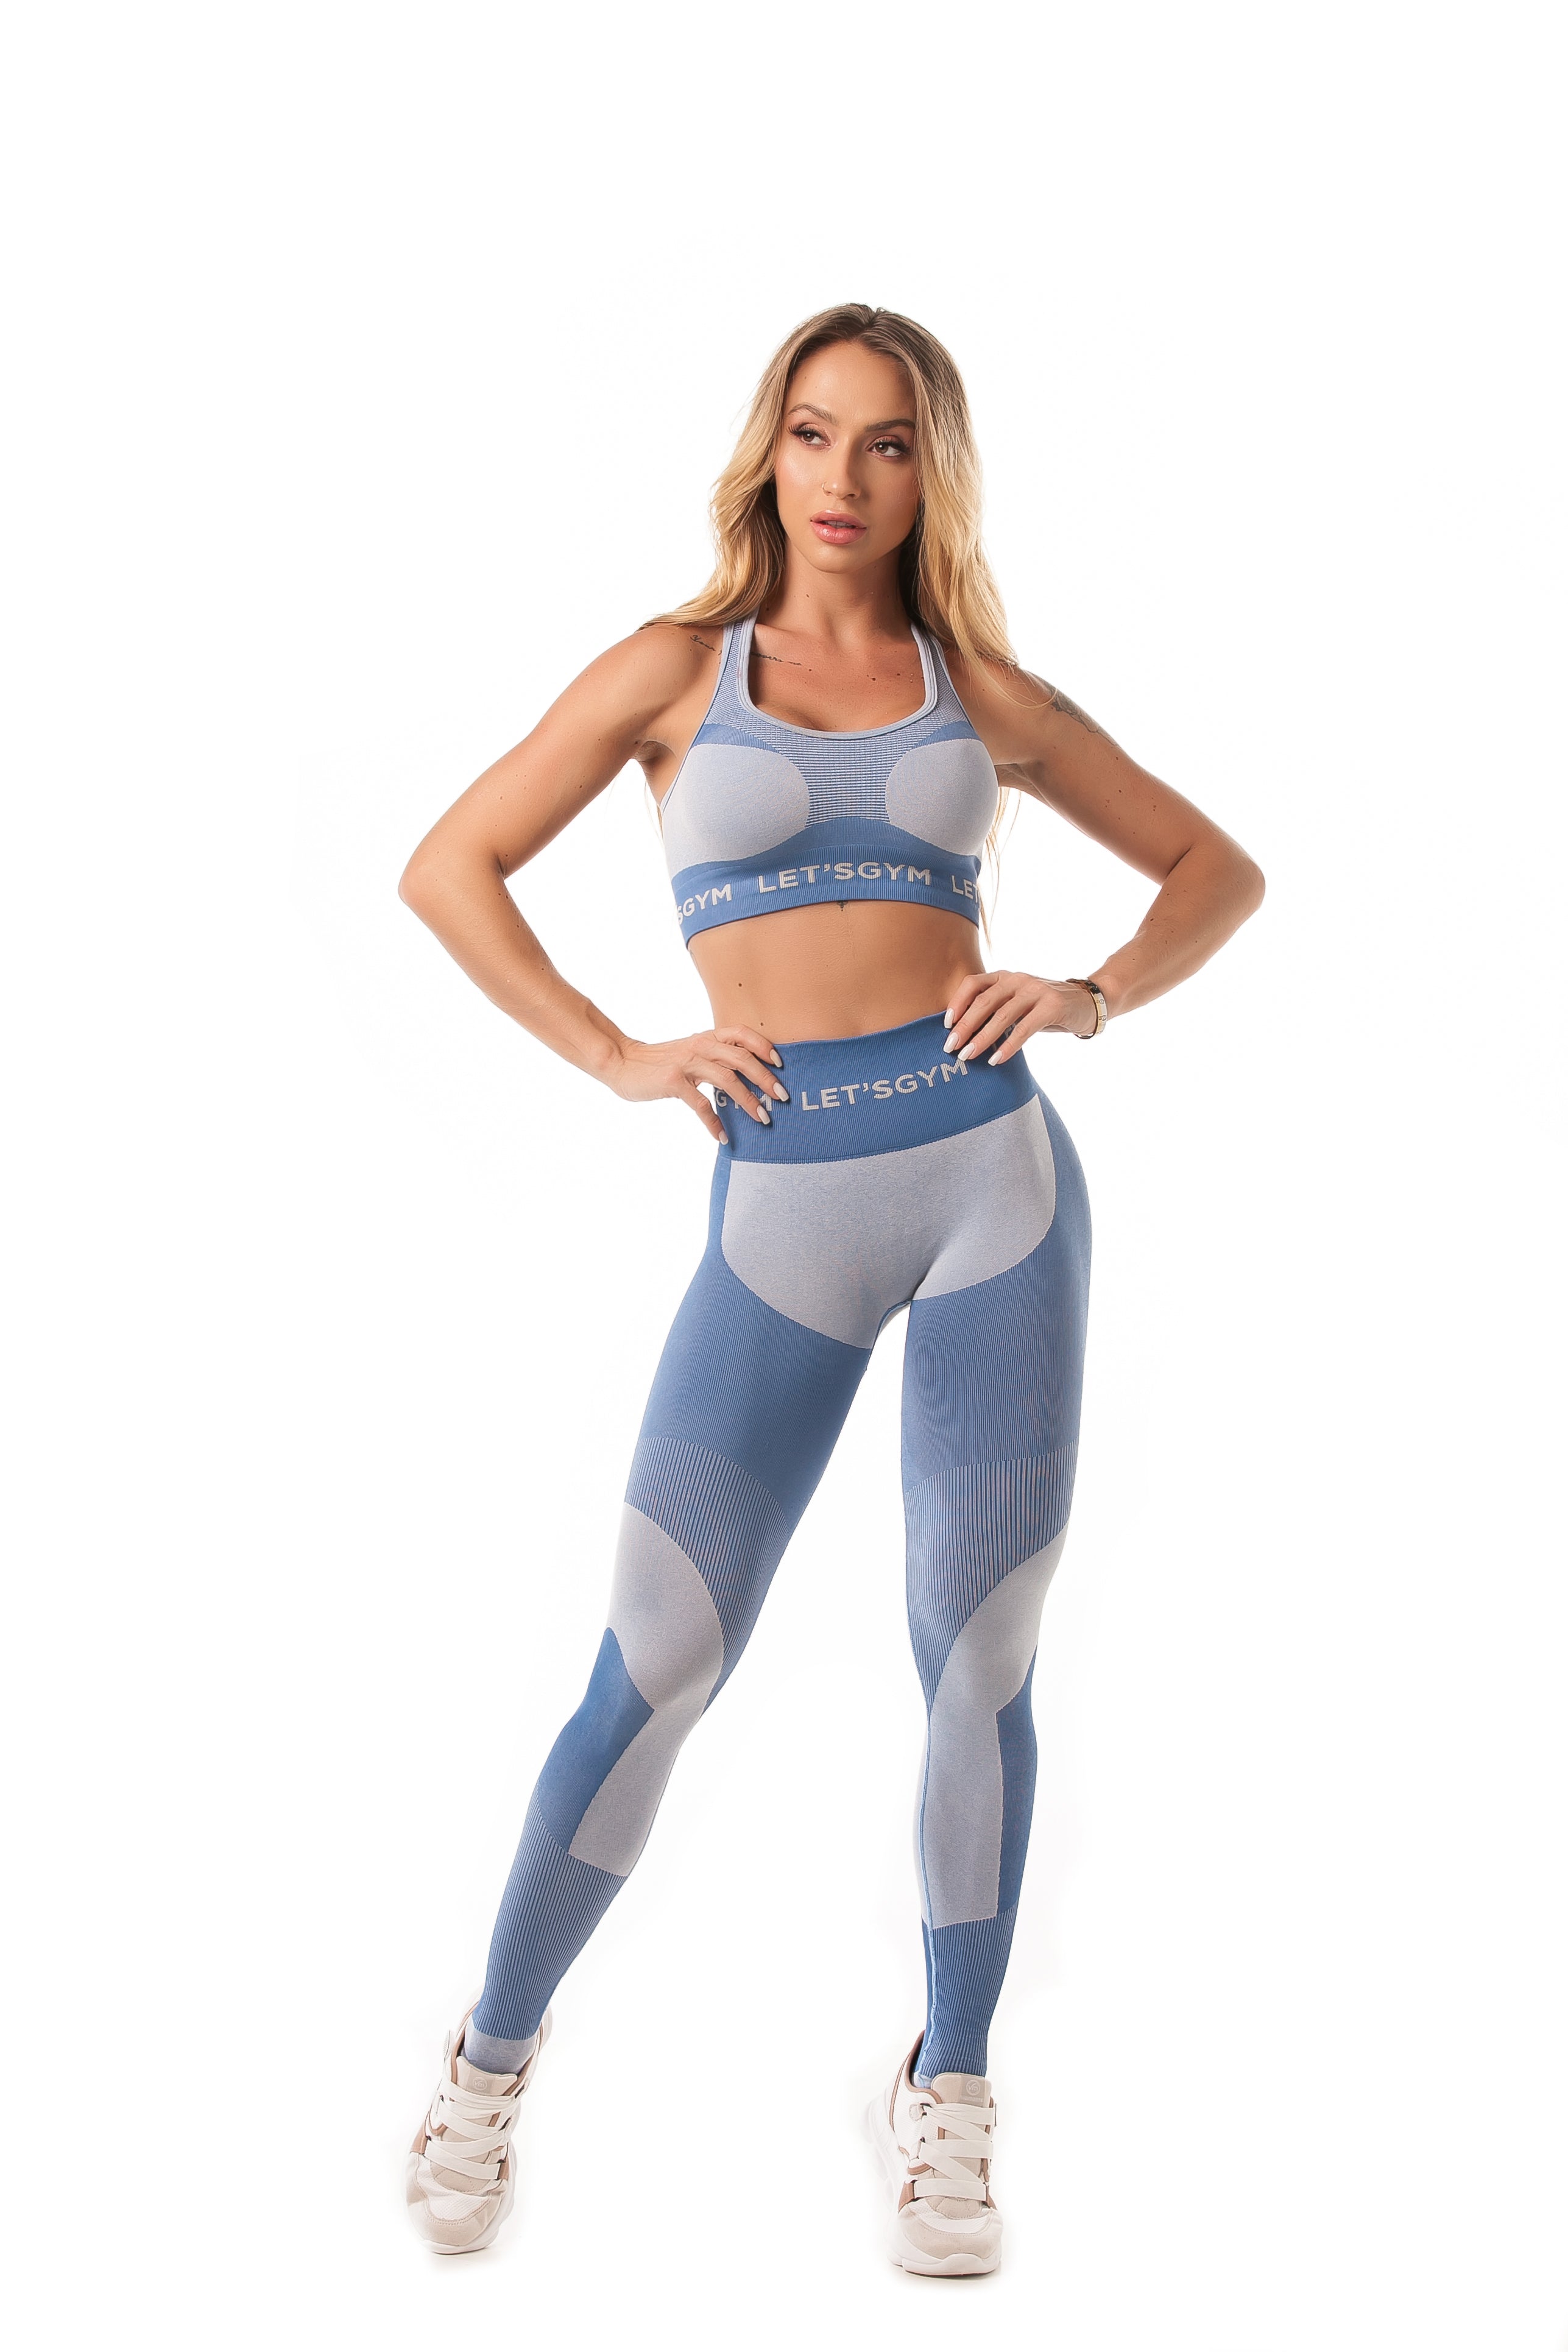 Let's Gym USA Brazilian Fashion Fitness Bra Top Seamless Baby Blue